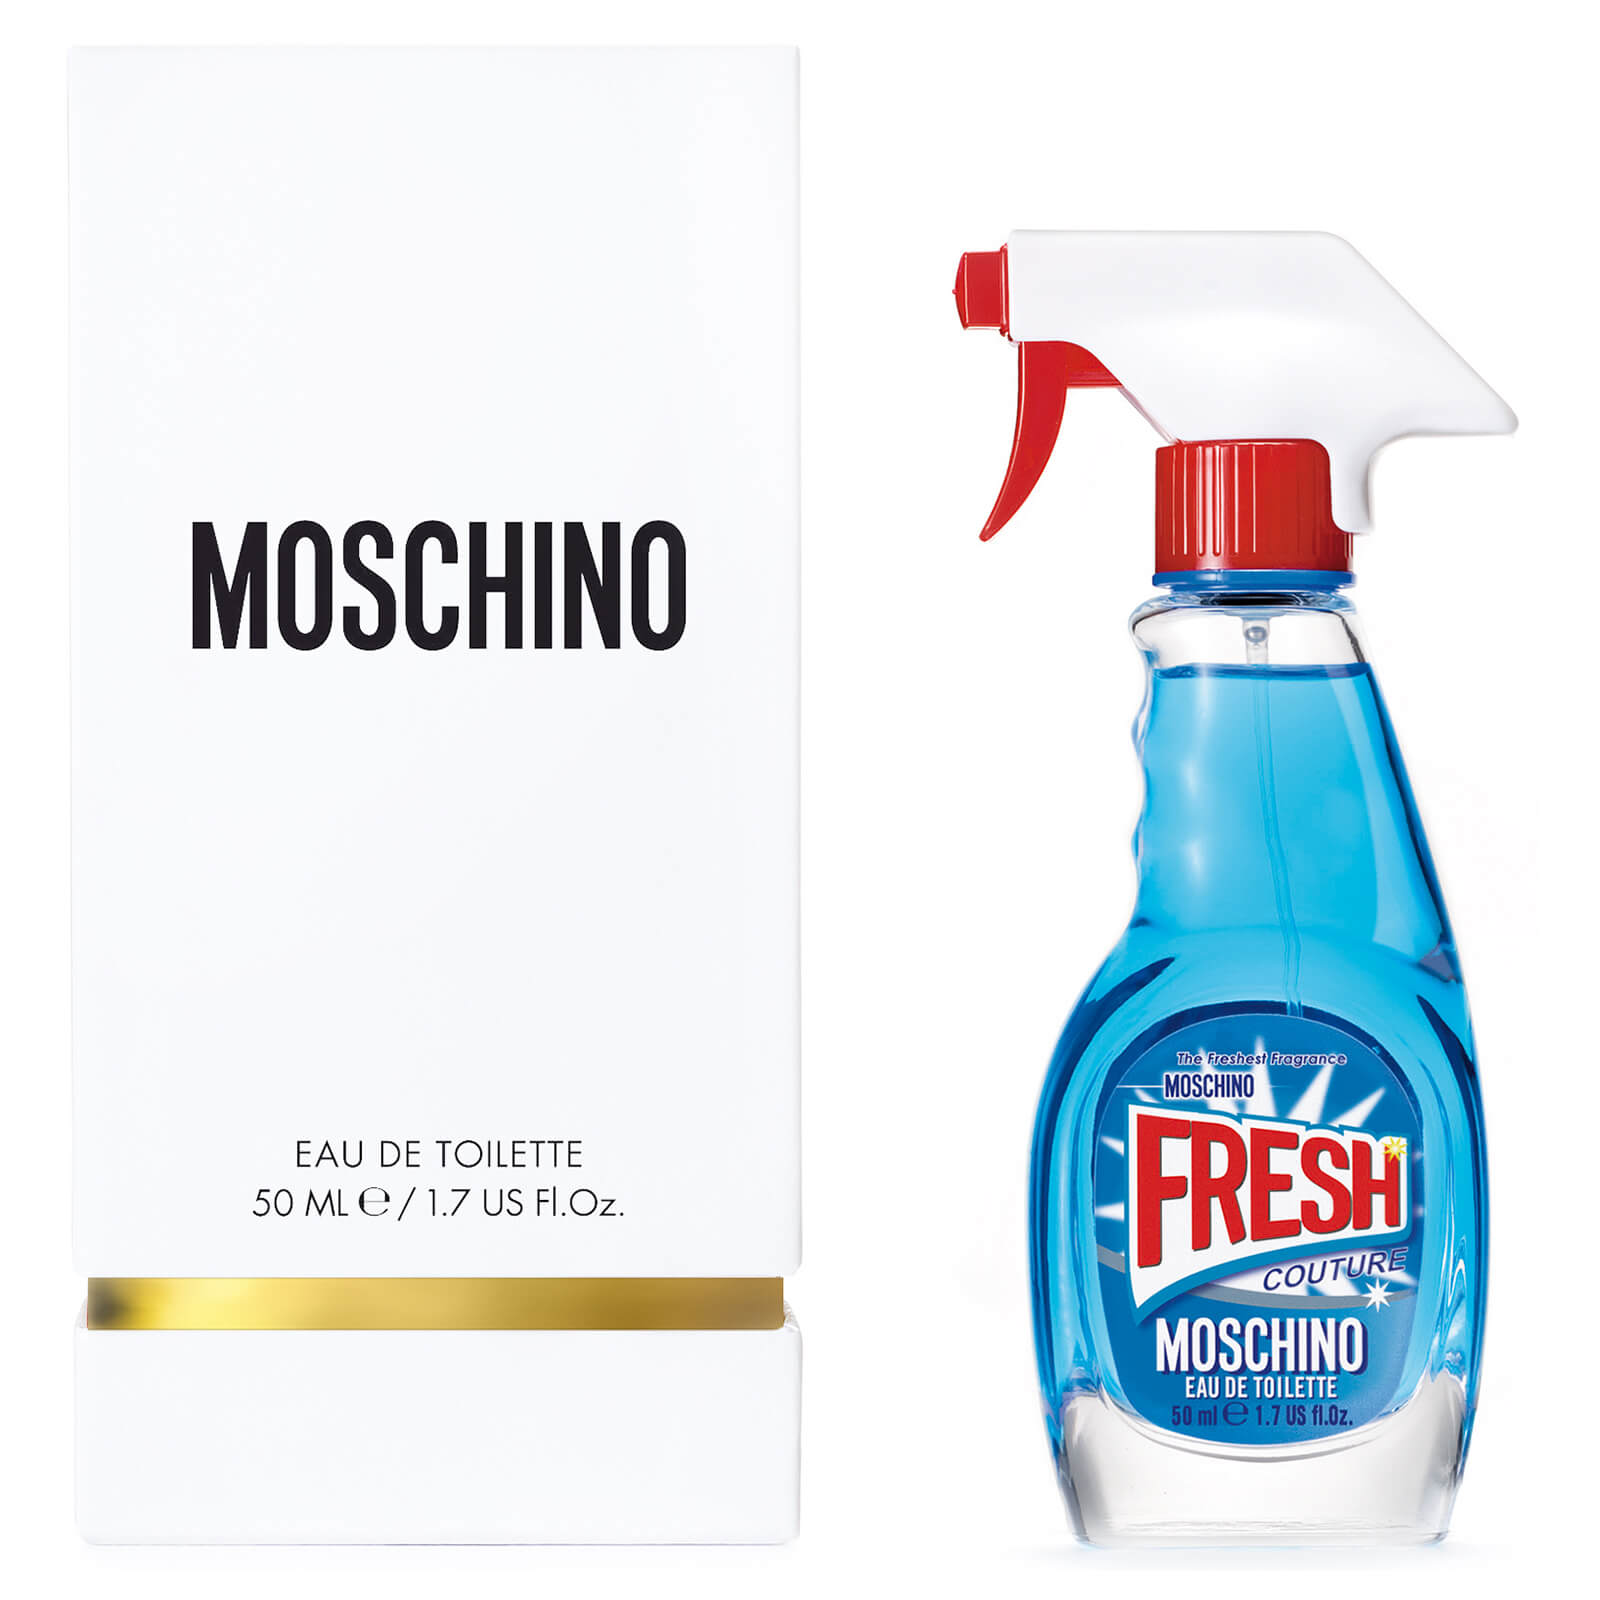 Fresh Couture Eau de Toilette de Moschino (50 ml)